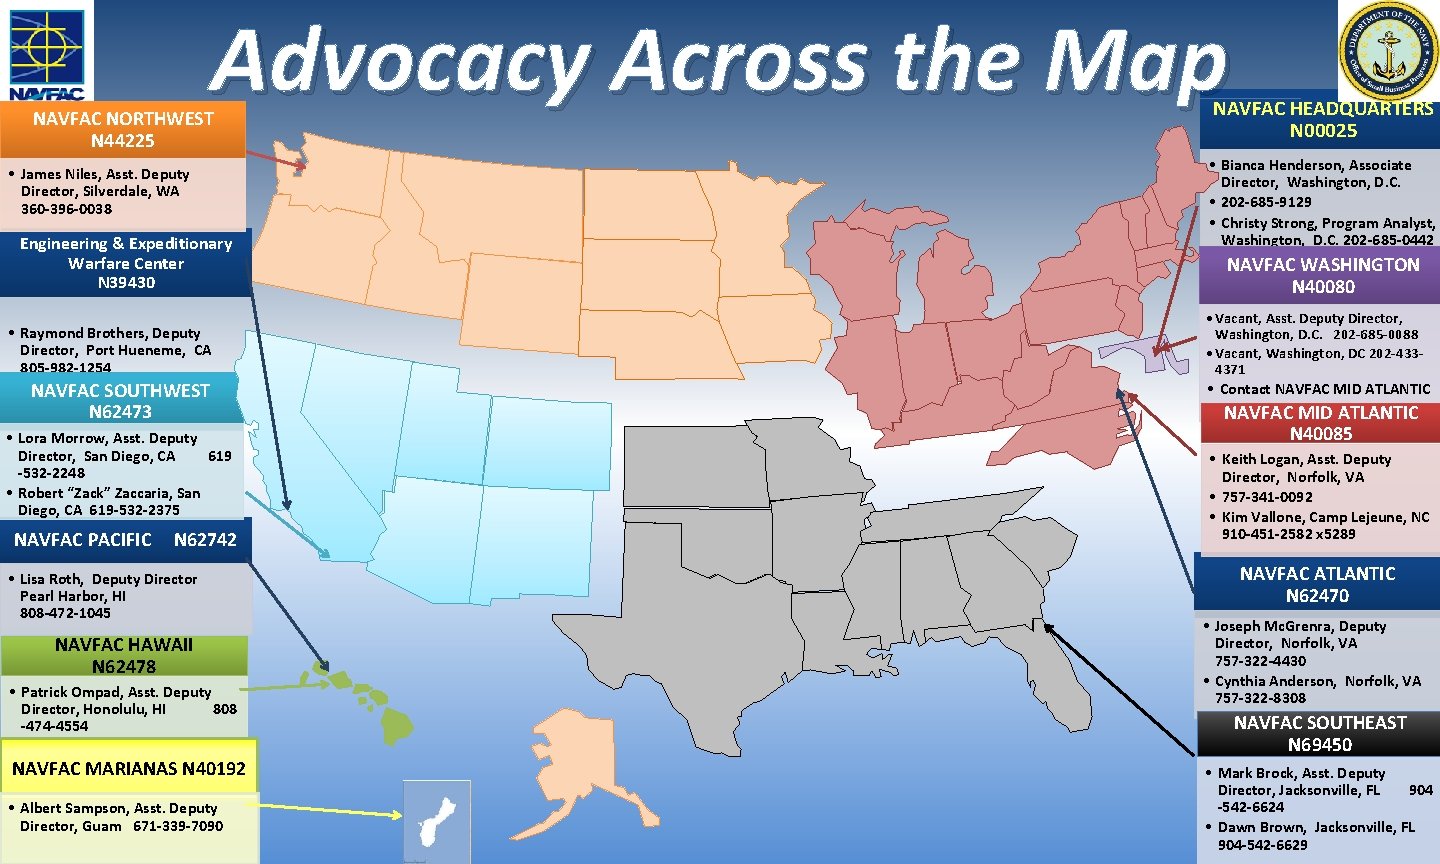 Advocacy Across the Map NAVFAC NORTHWEST N 44225 • James Niles, Asst. Deputy Director,